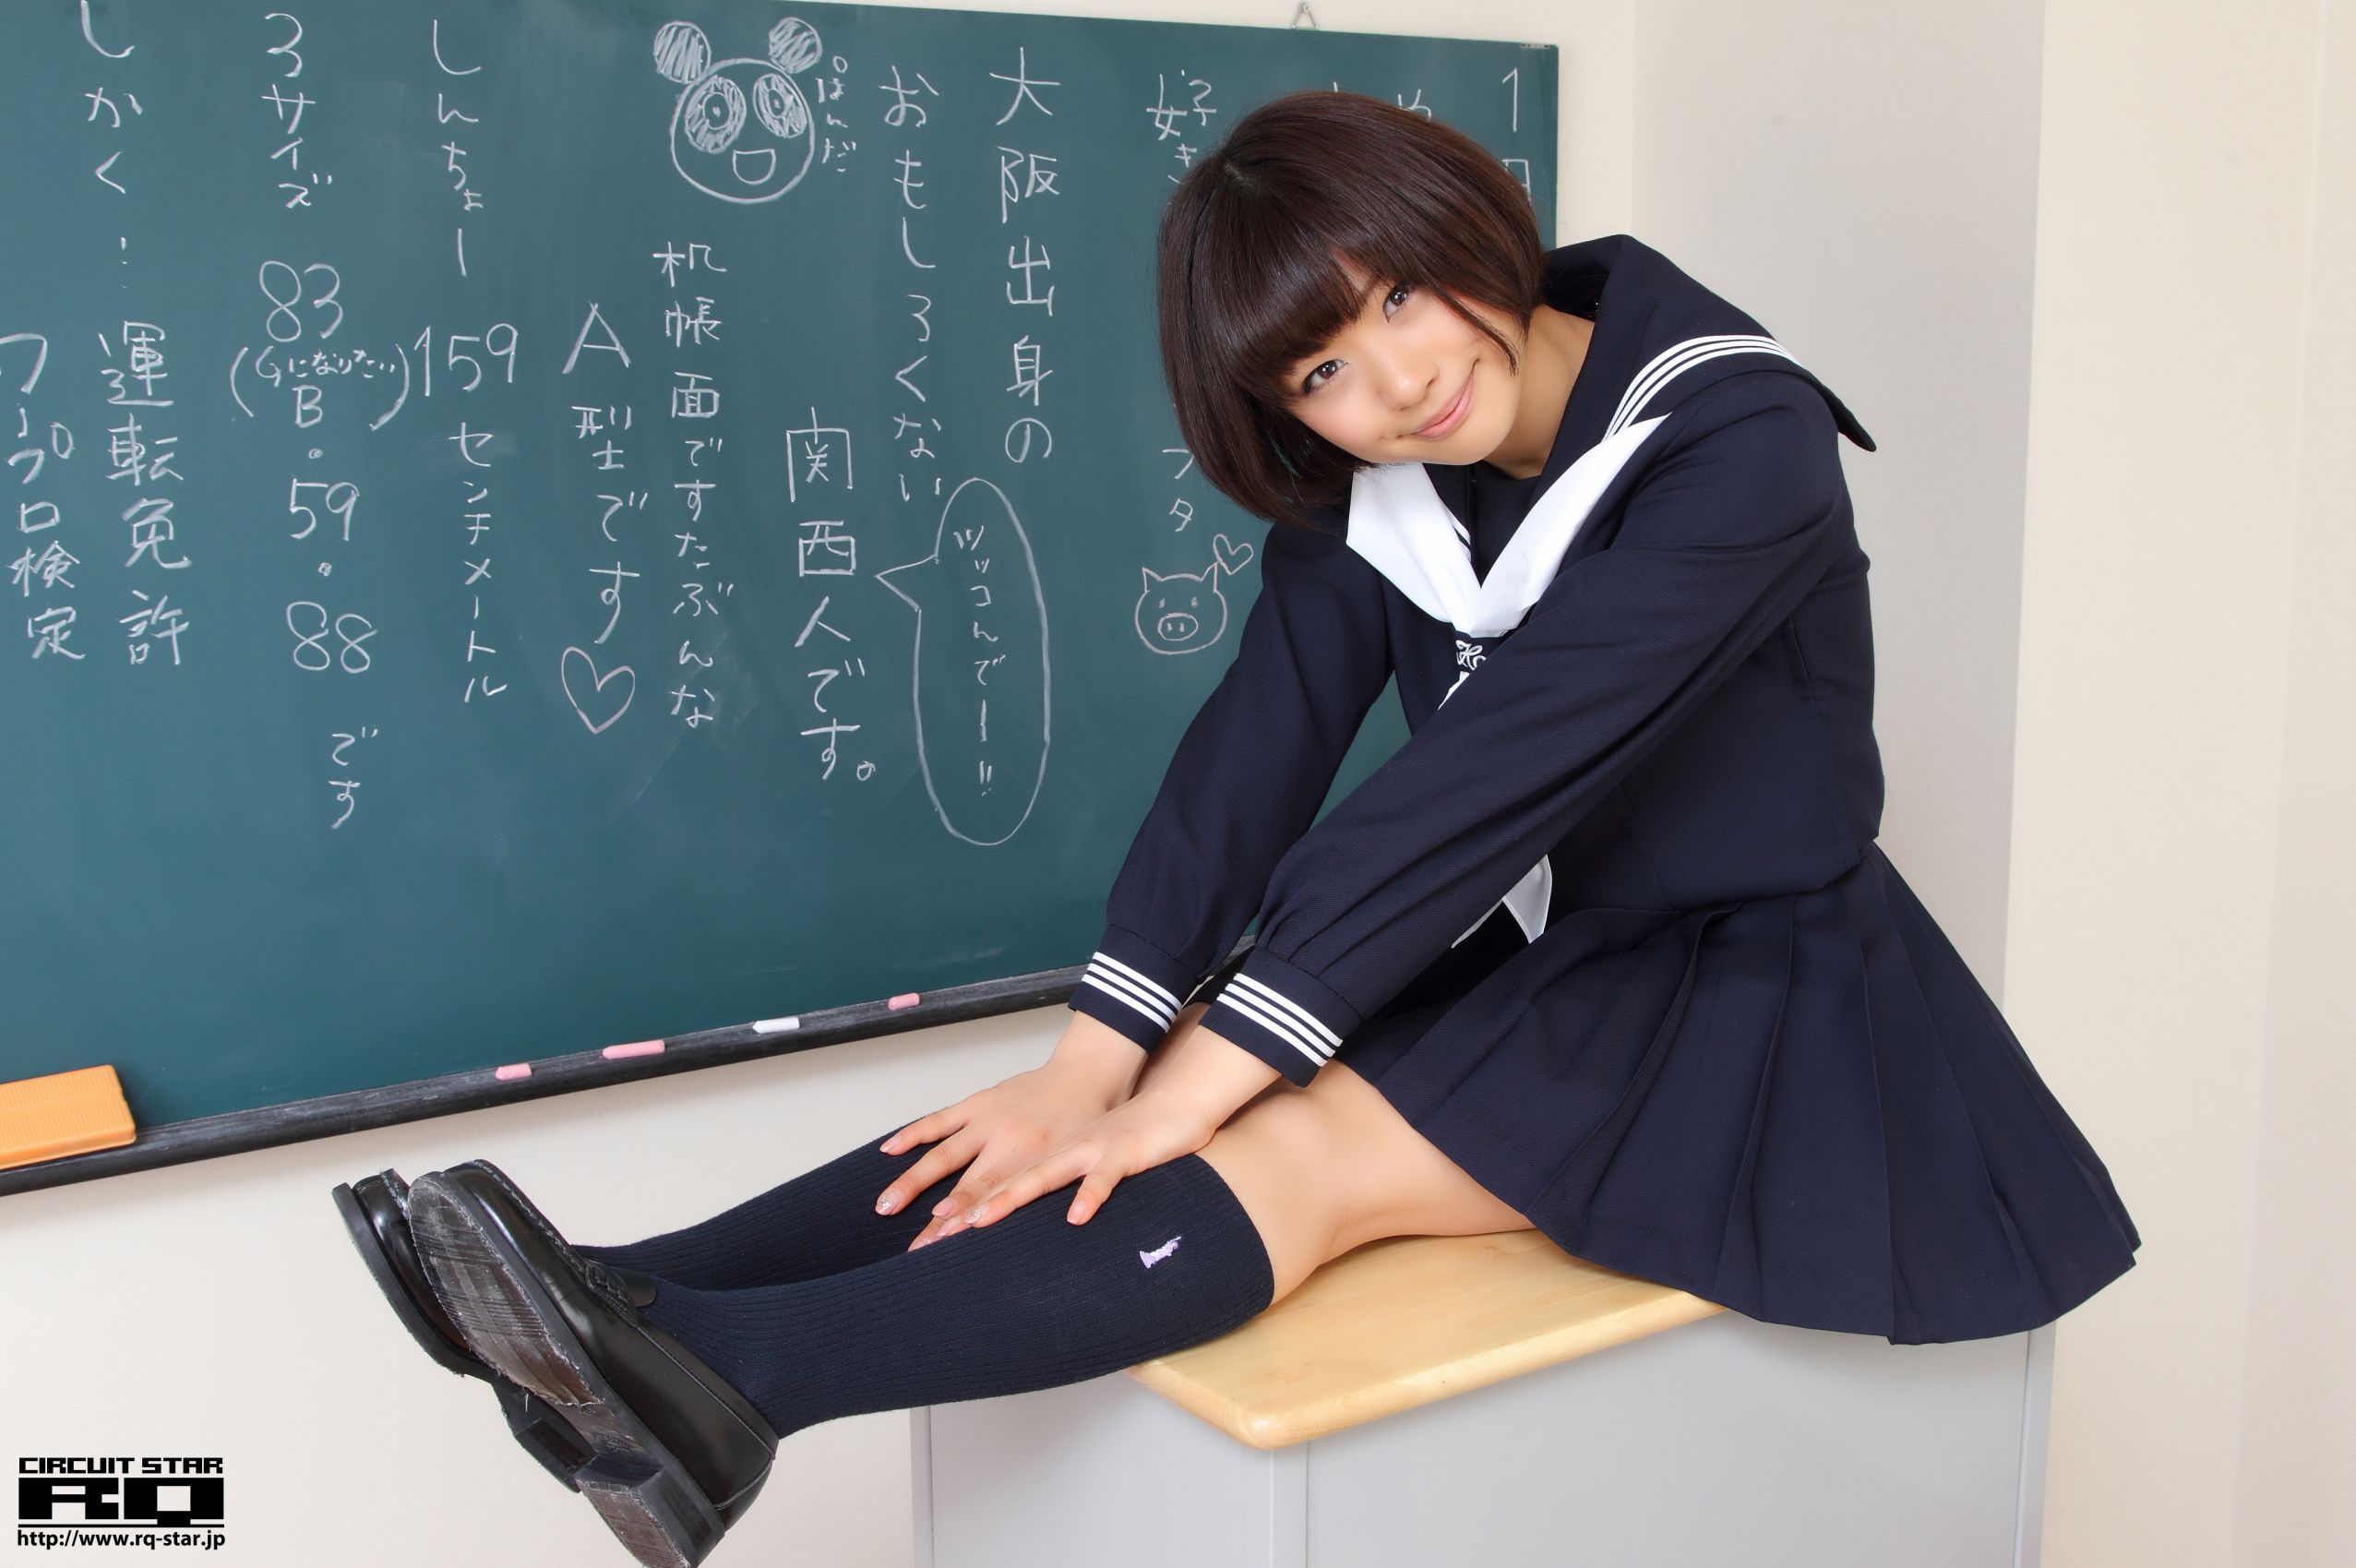 Japanese schoolgirl humping